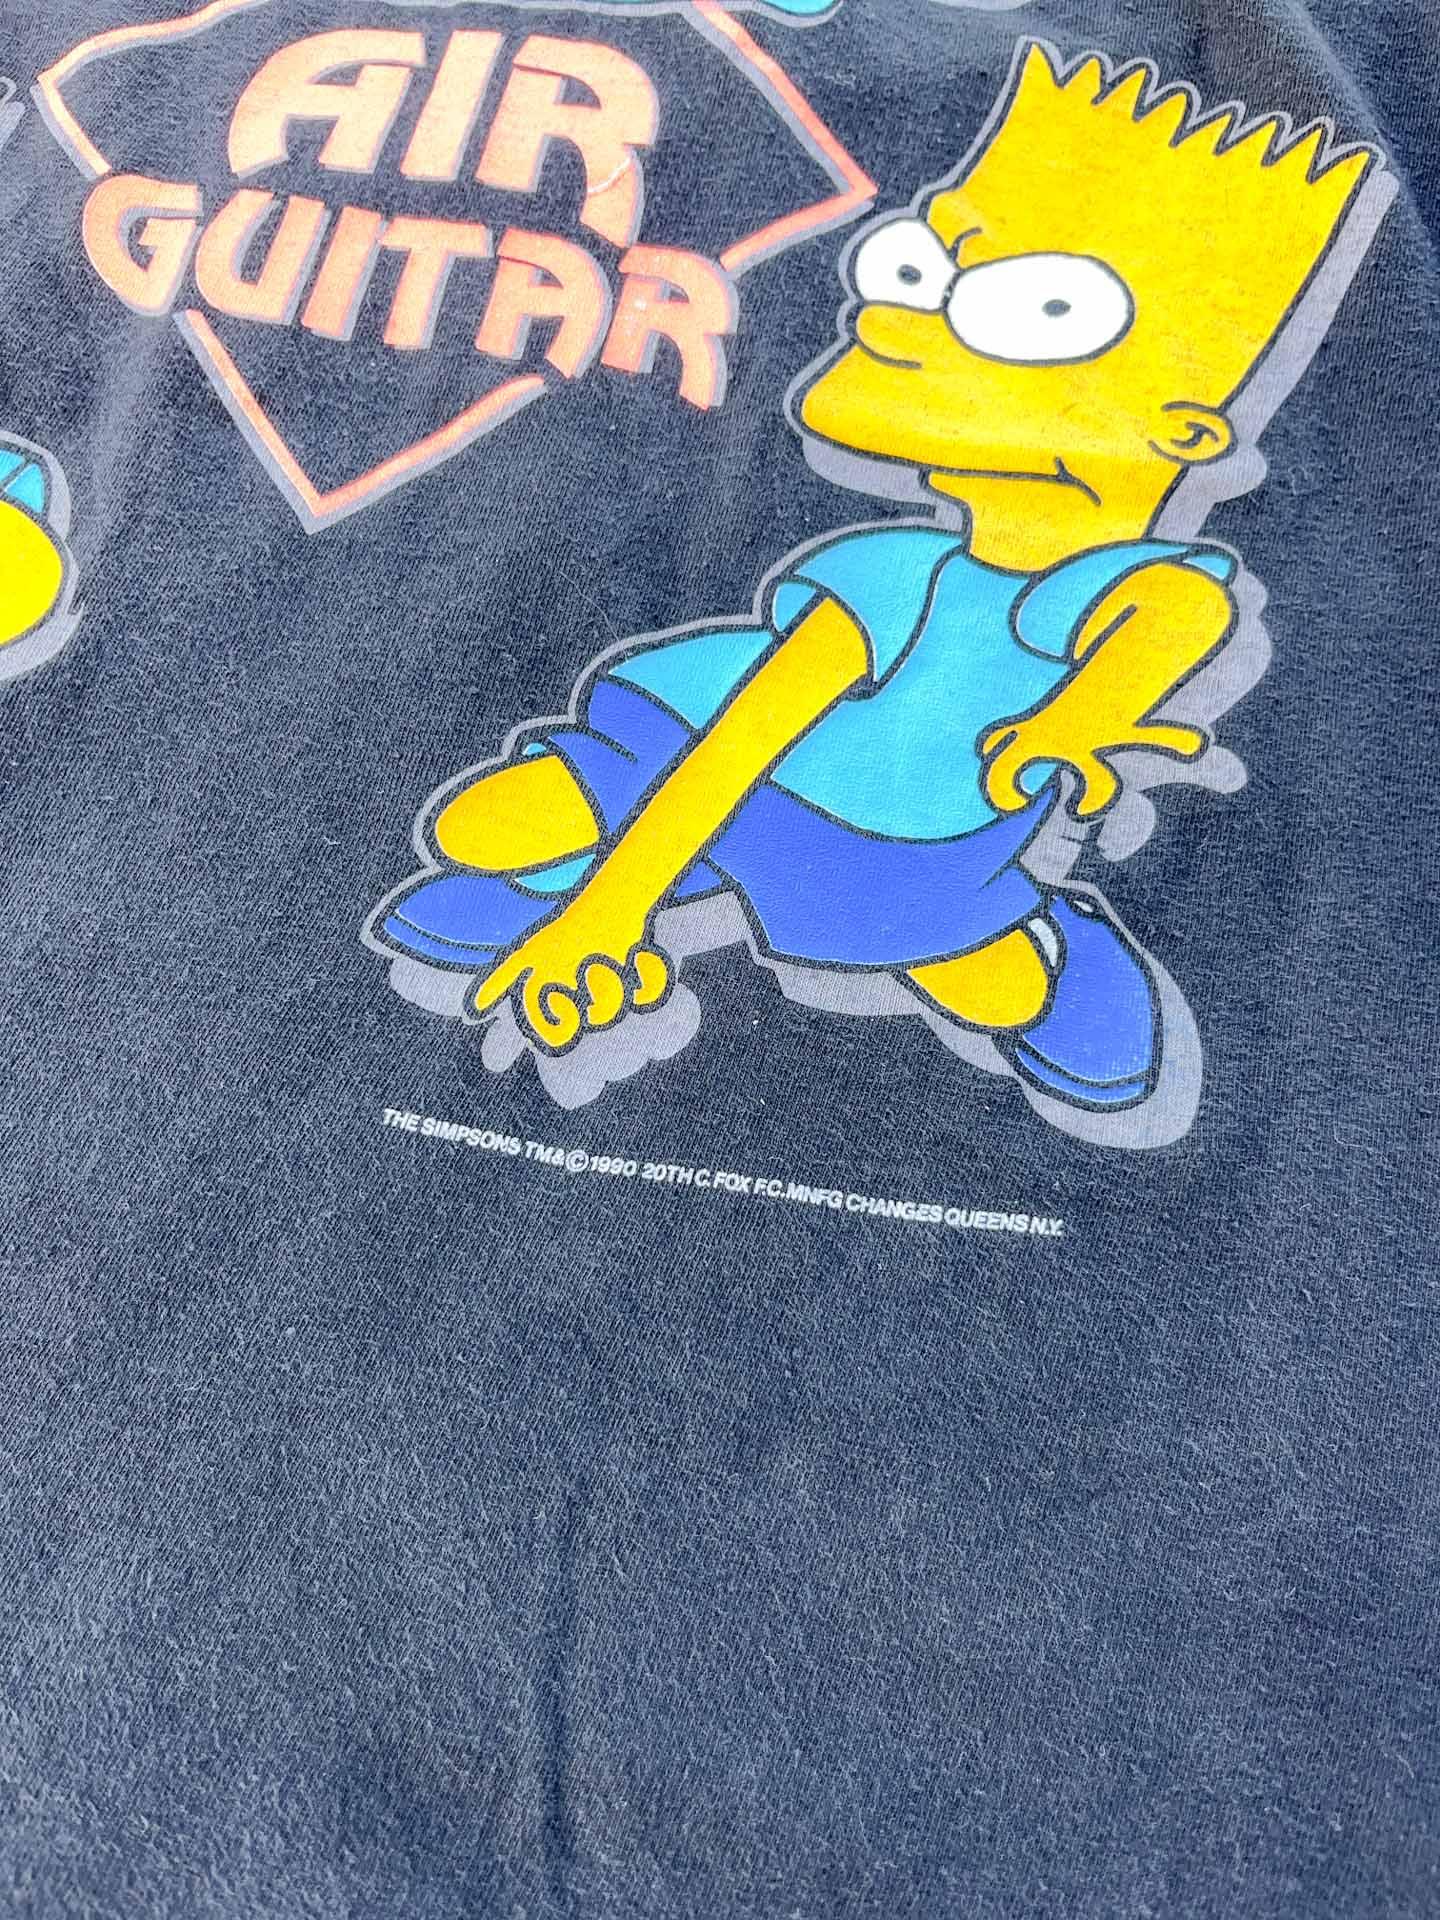 1990 Air Guitar Bart Simpson - secondvintage